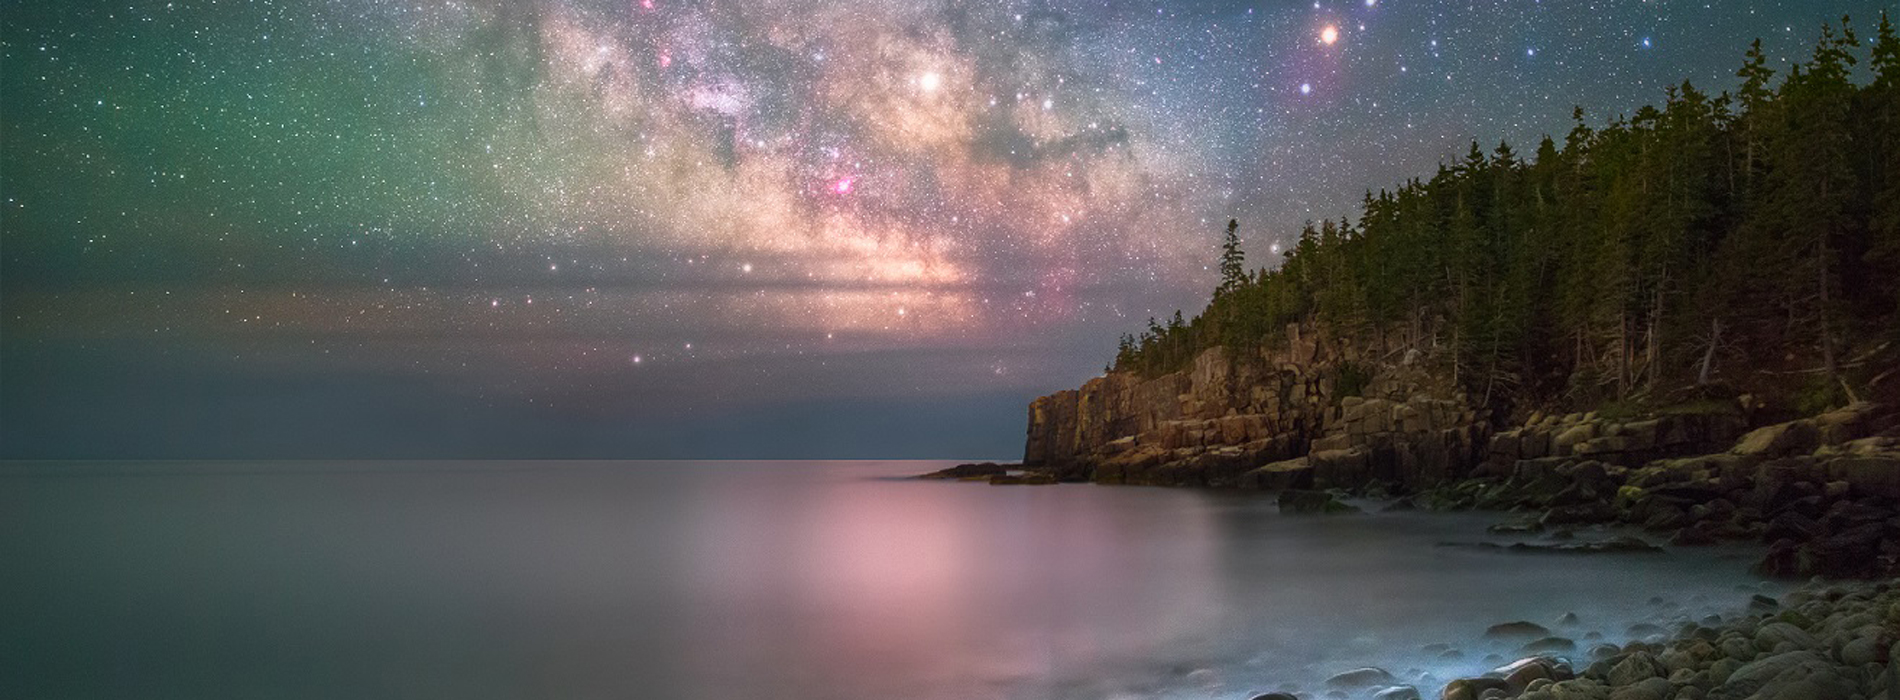 Share the Experience photo contest, Acadia National Park in Maine/Manish Mamtani